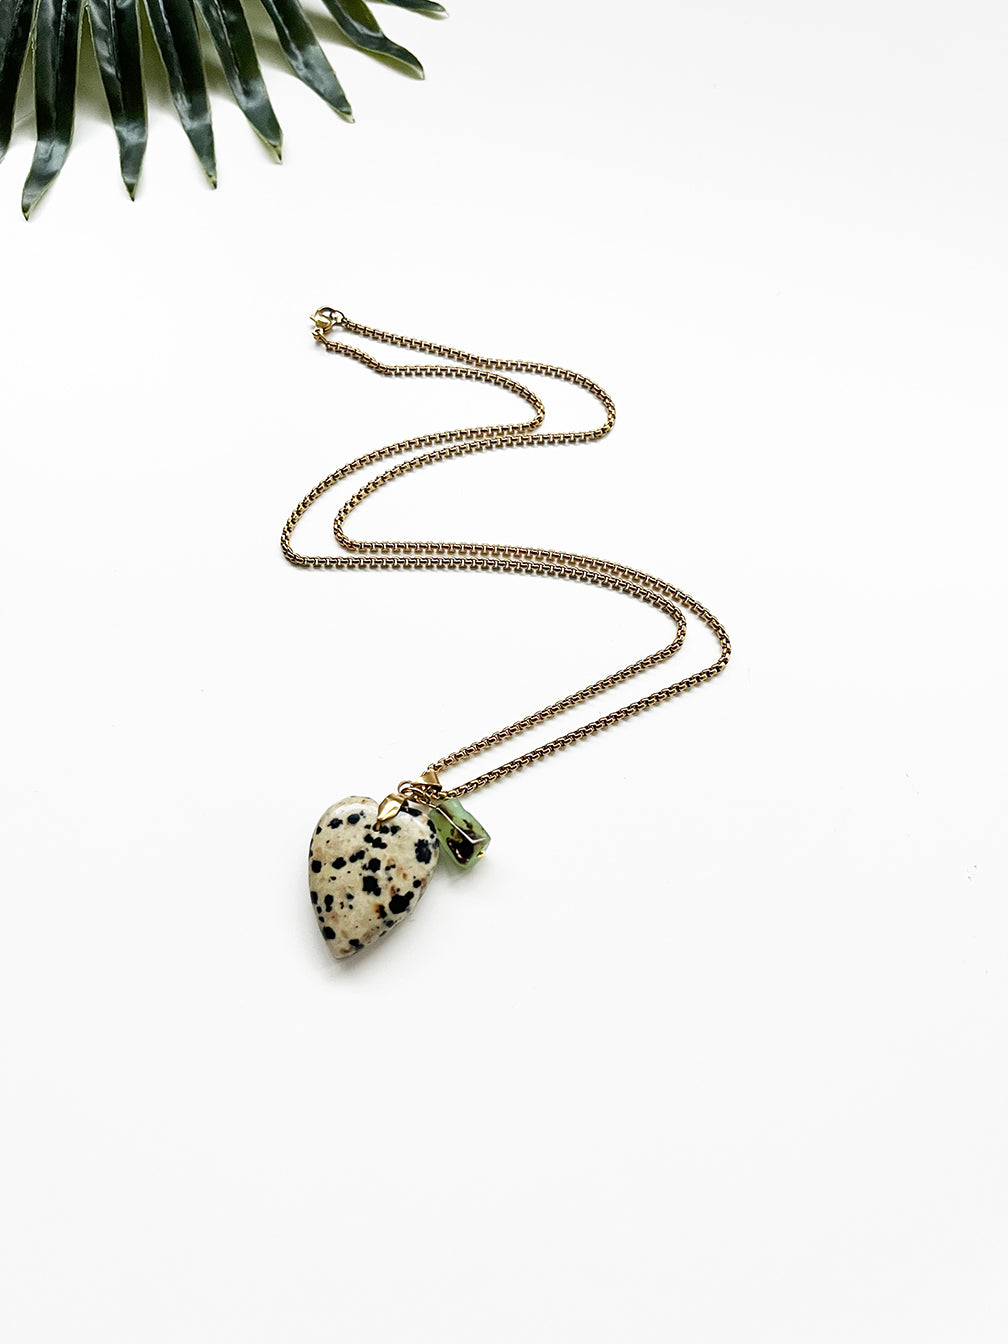 touchstone necklace - dalmatian jasper and chrysoprase